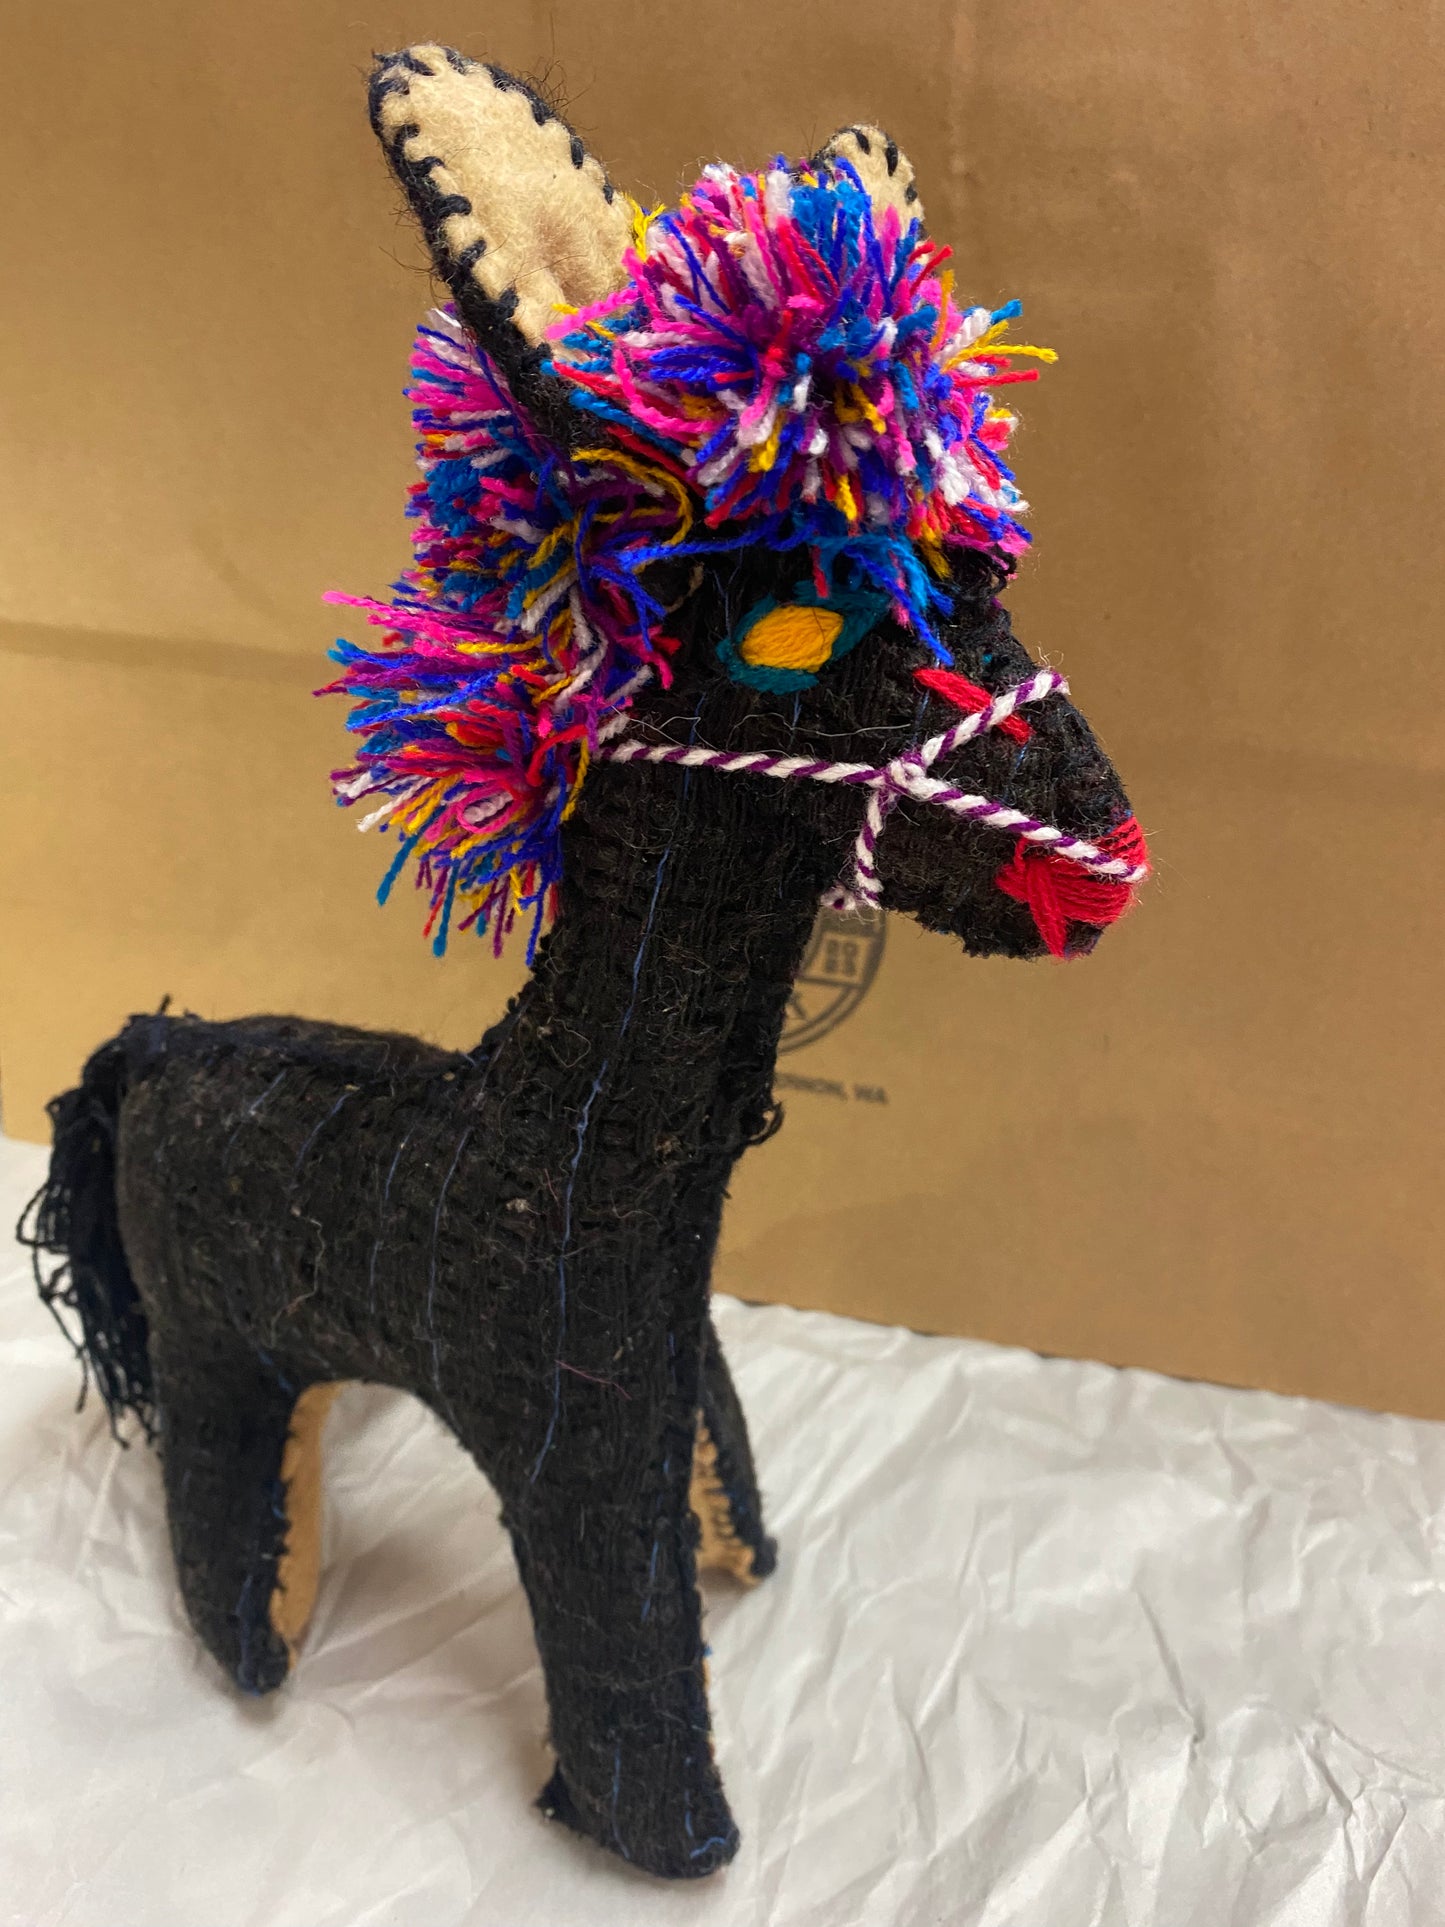 Hand-sewn folk art stuffed animal horse/donkey